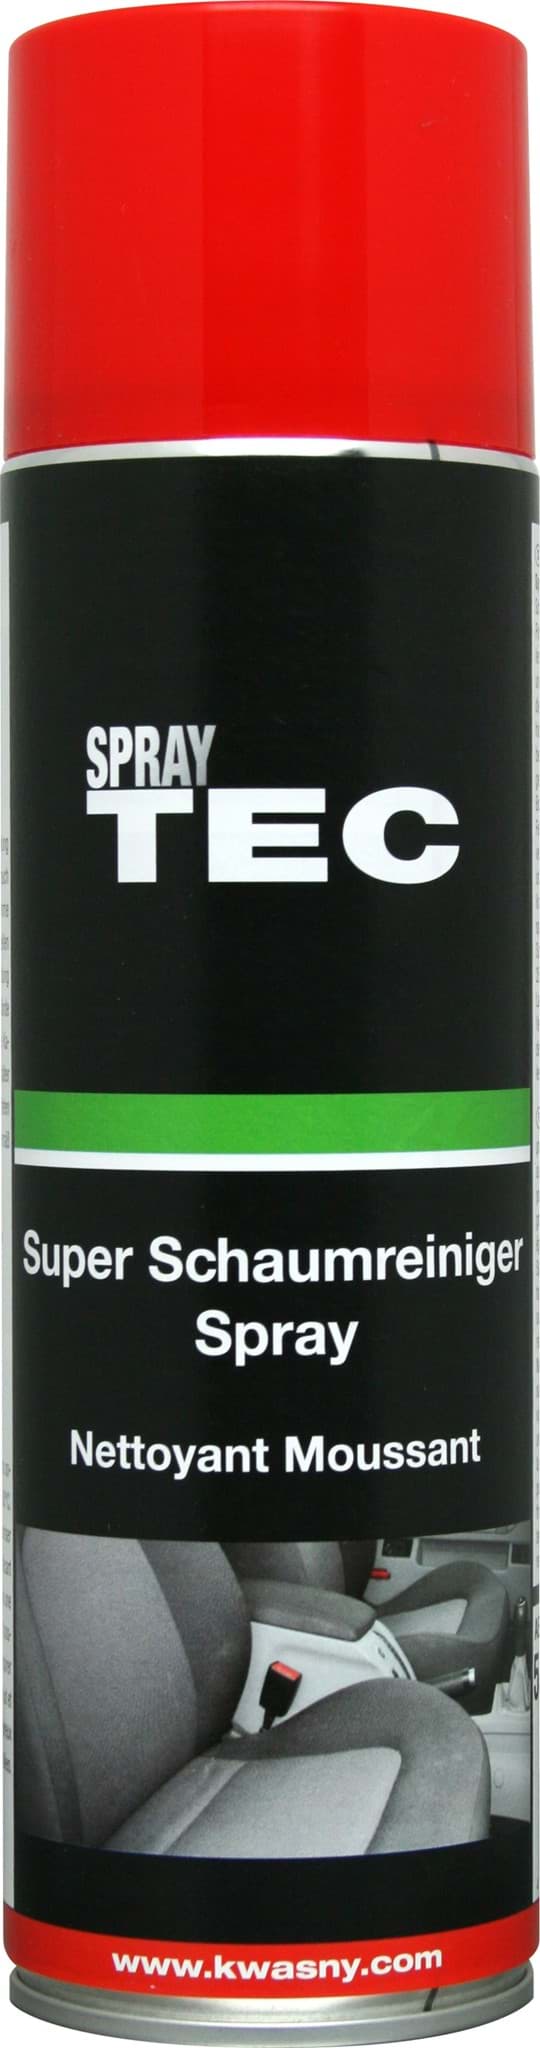 Obraz Super Schaumreiniger Spray 500ml SprayTEC